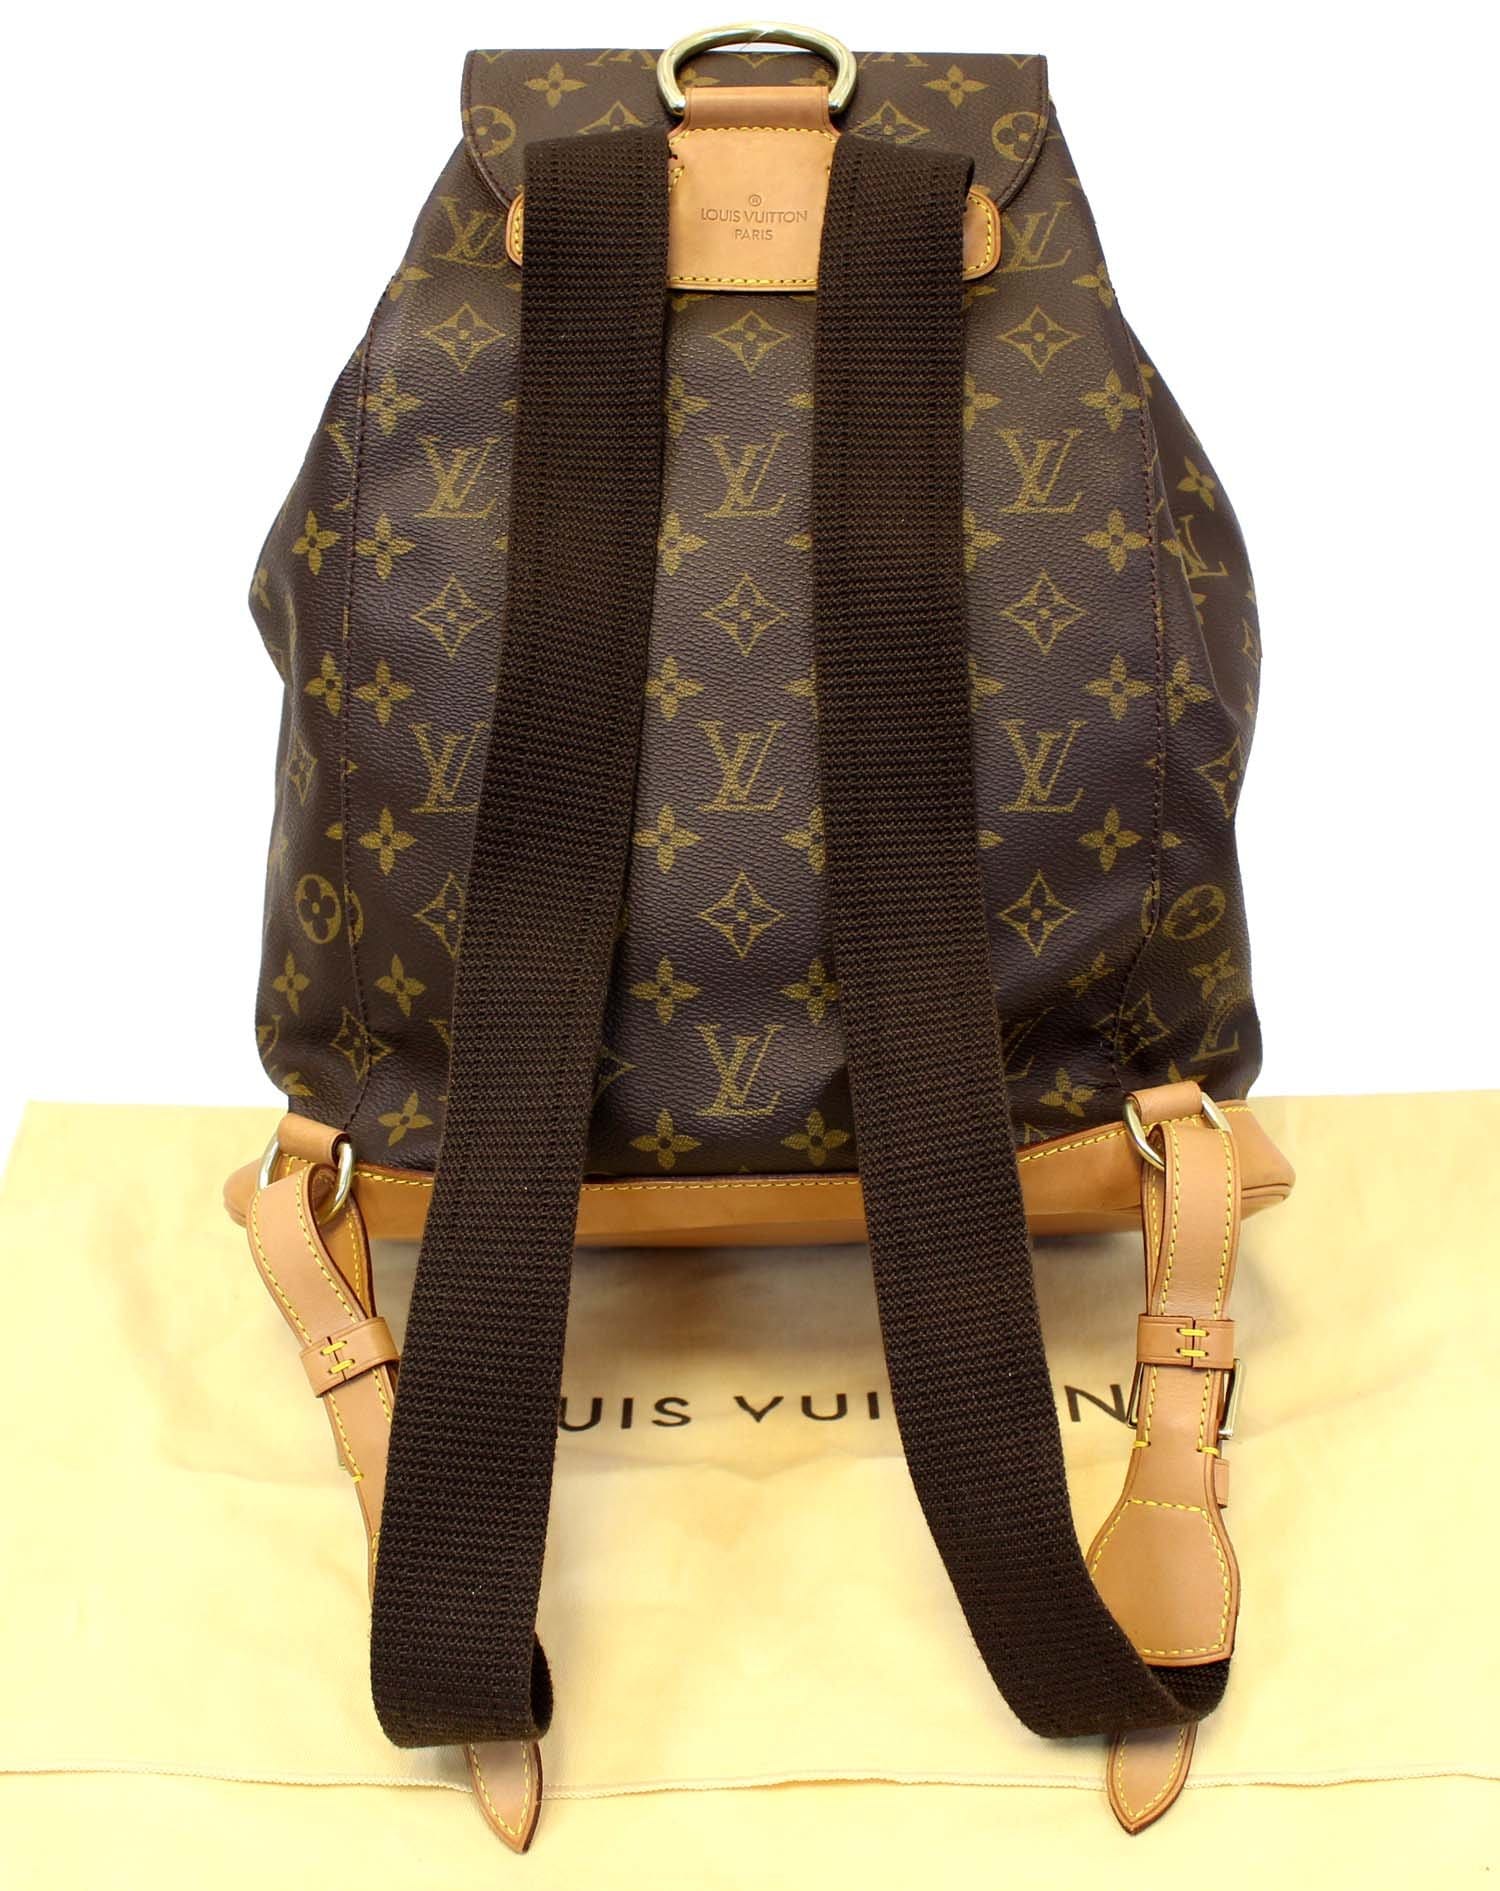 Repurposed Louis Vui  Louis vuitton handbags, Louis vuitton bag, Louis  vuitton collection